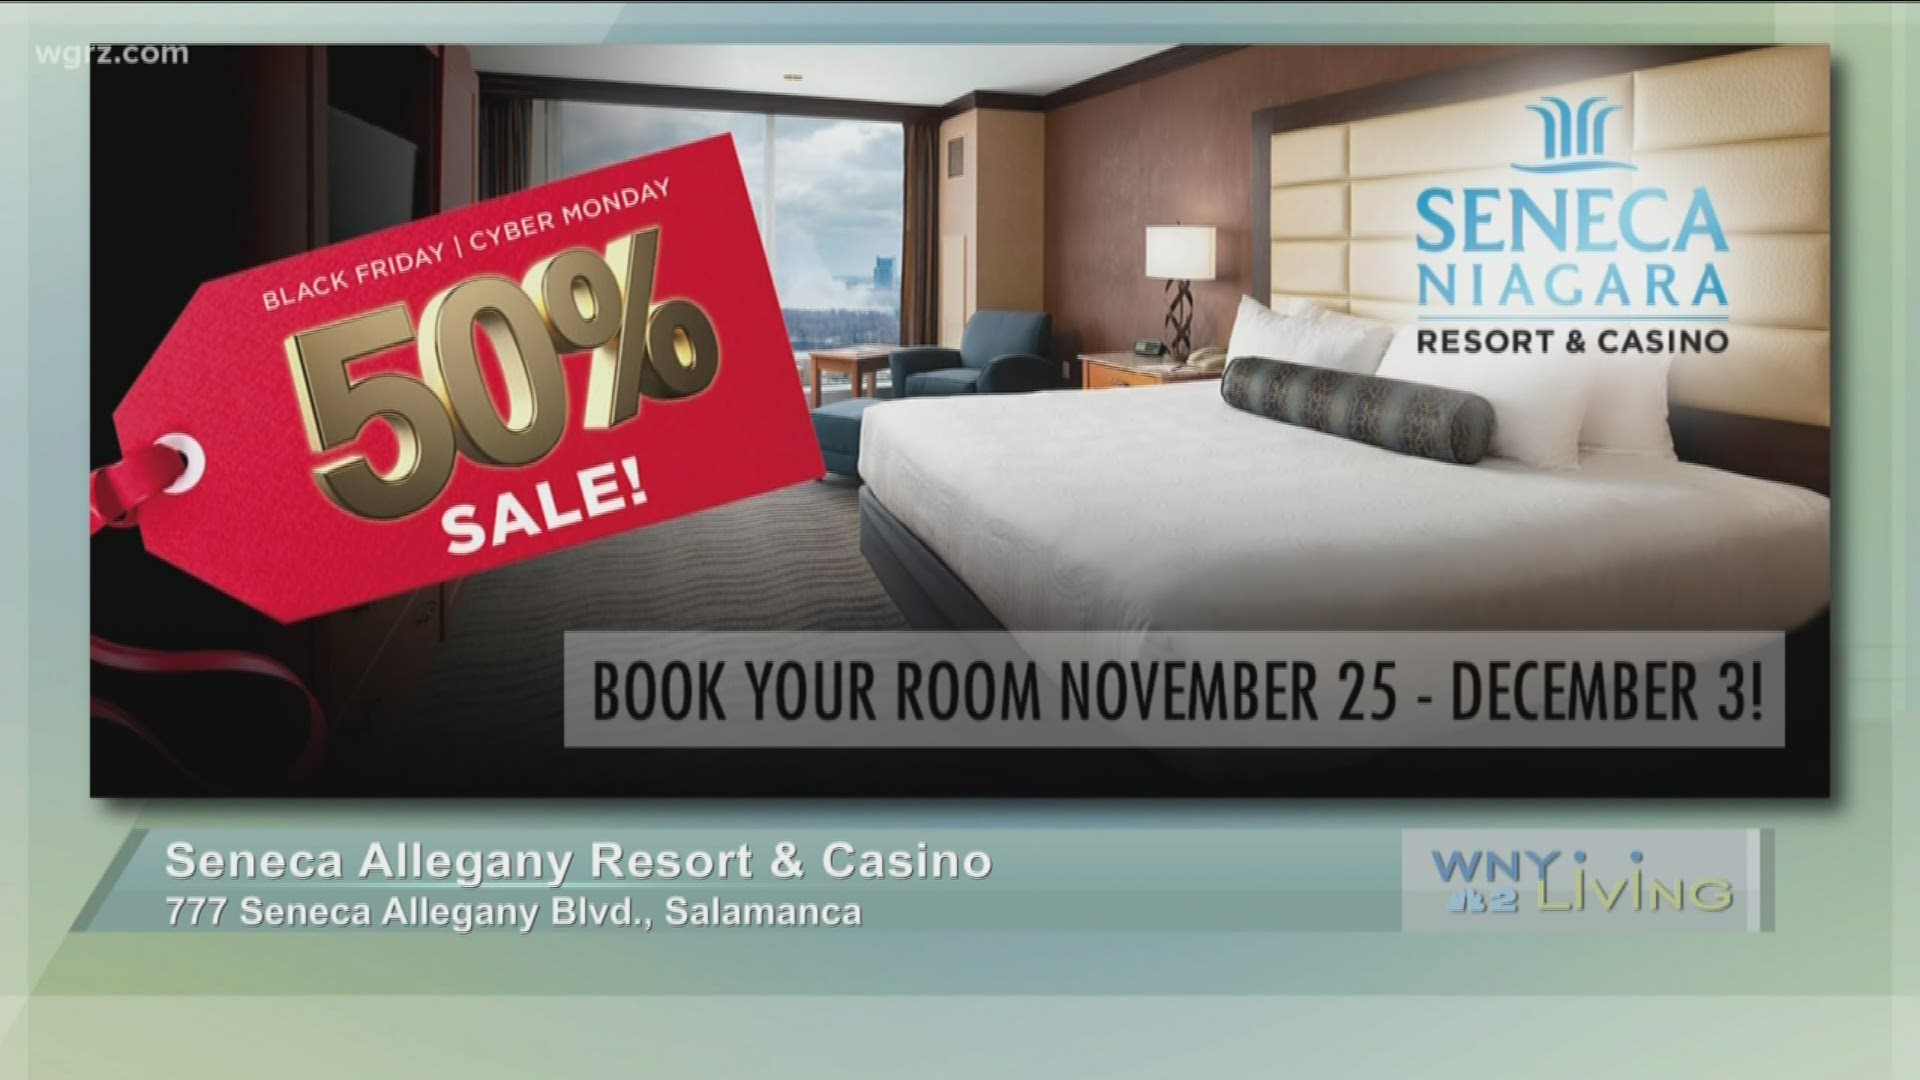 November 16 - Seneca Resorts and Casinos (THIS VIDEO IS SPONSORED BY SENECA RESORTS AND CASINOS)